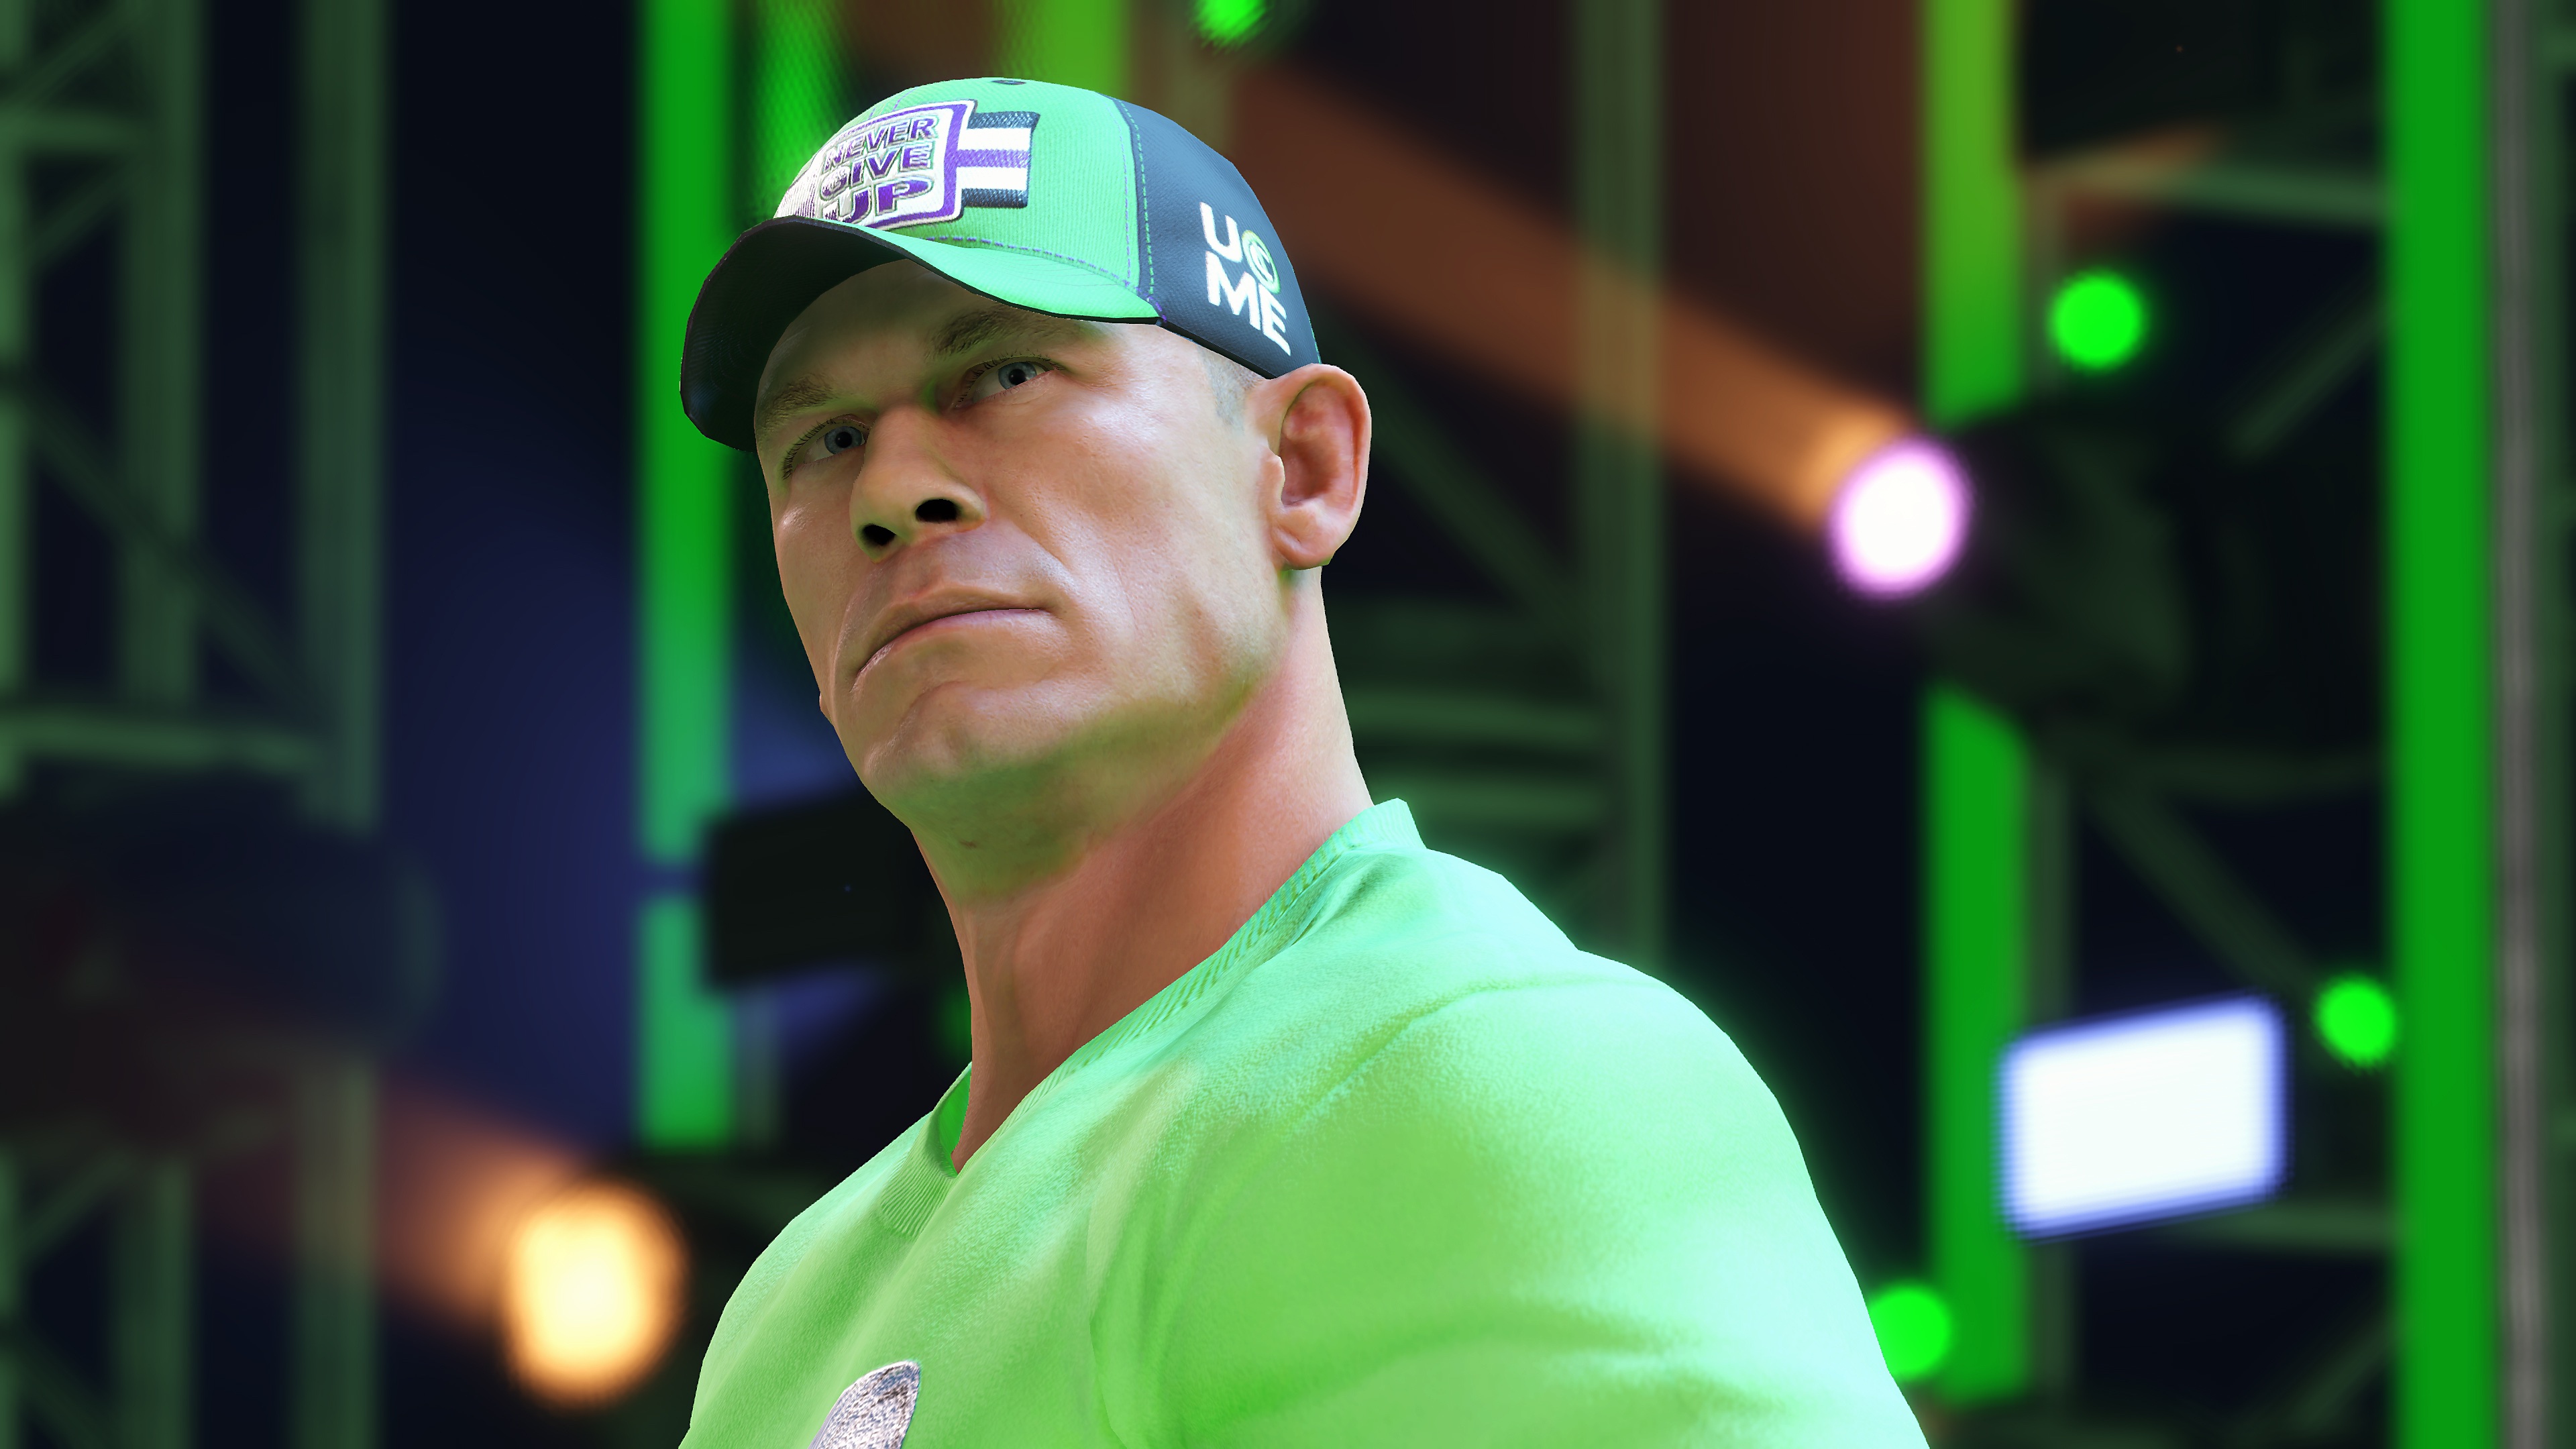 WWE 2K22 – снимок экрана